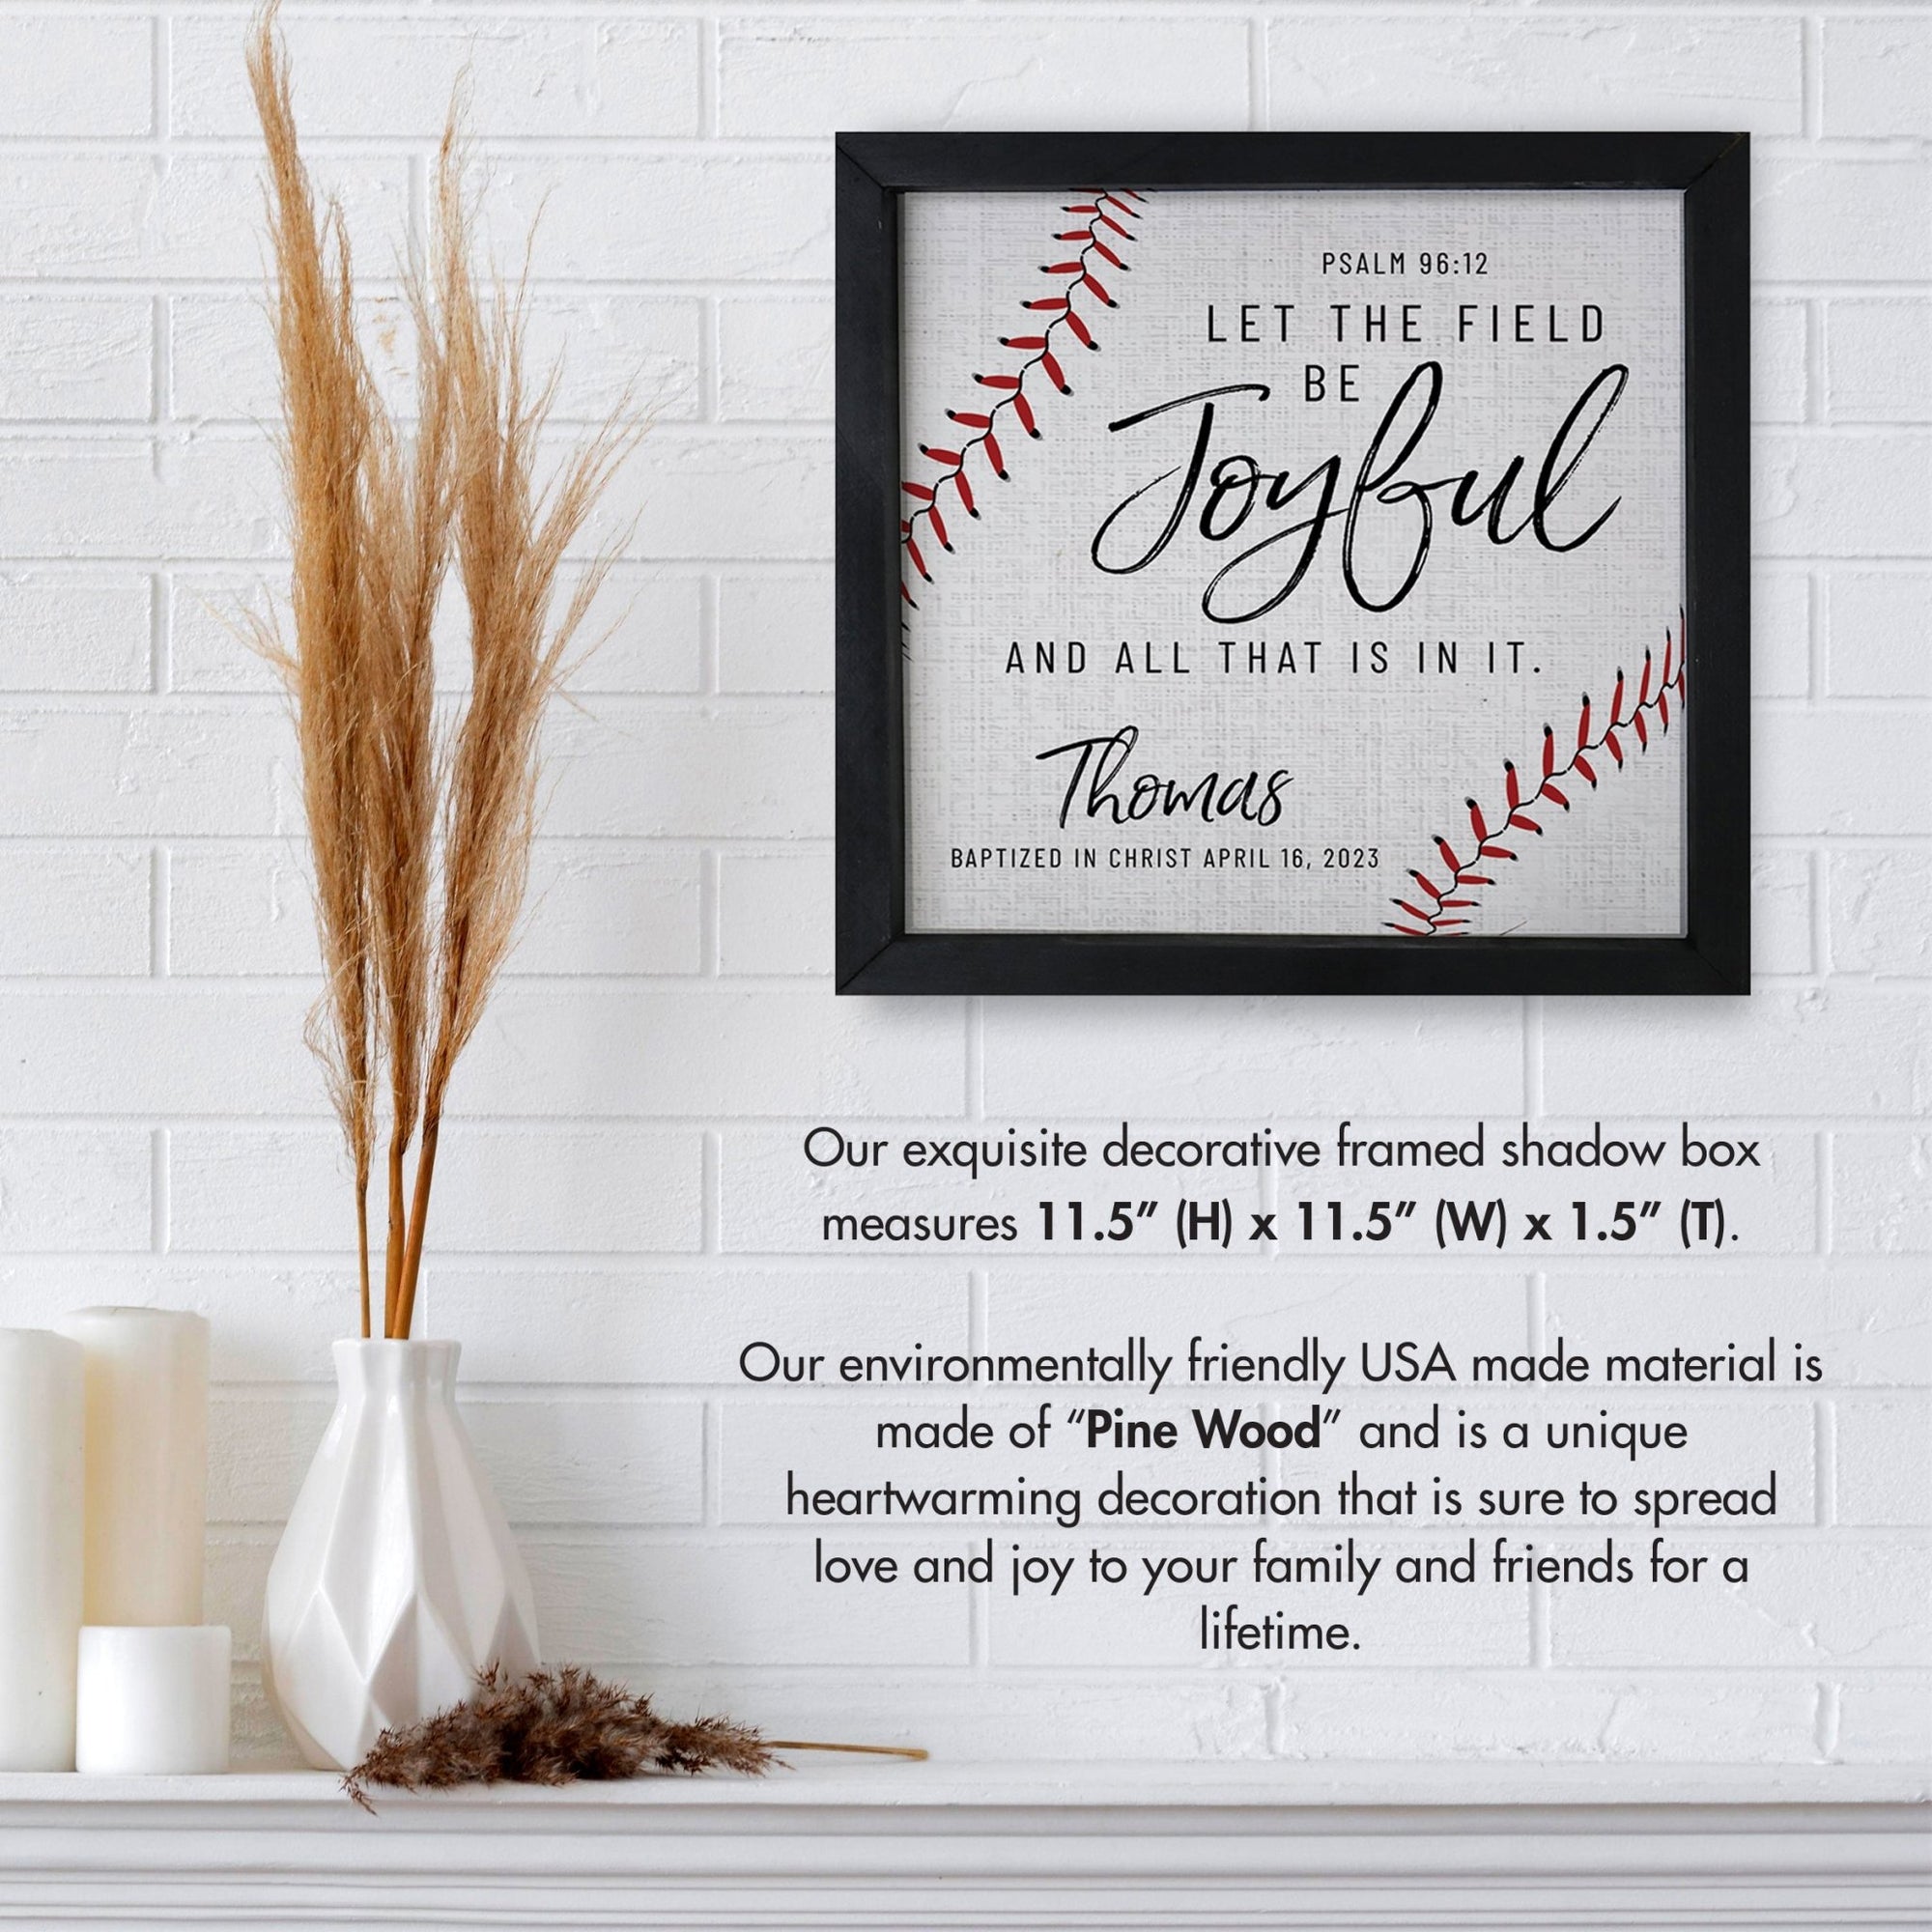 Personalized Elegant Baseball Framed Shadow Box Shelf Décor With Inspiring Bible Verses - Let The Field Be Joyful - LifeSong Milestones